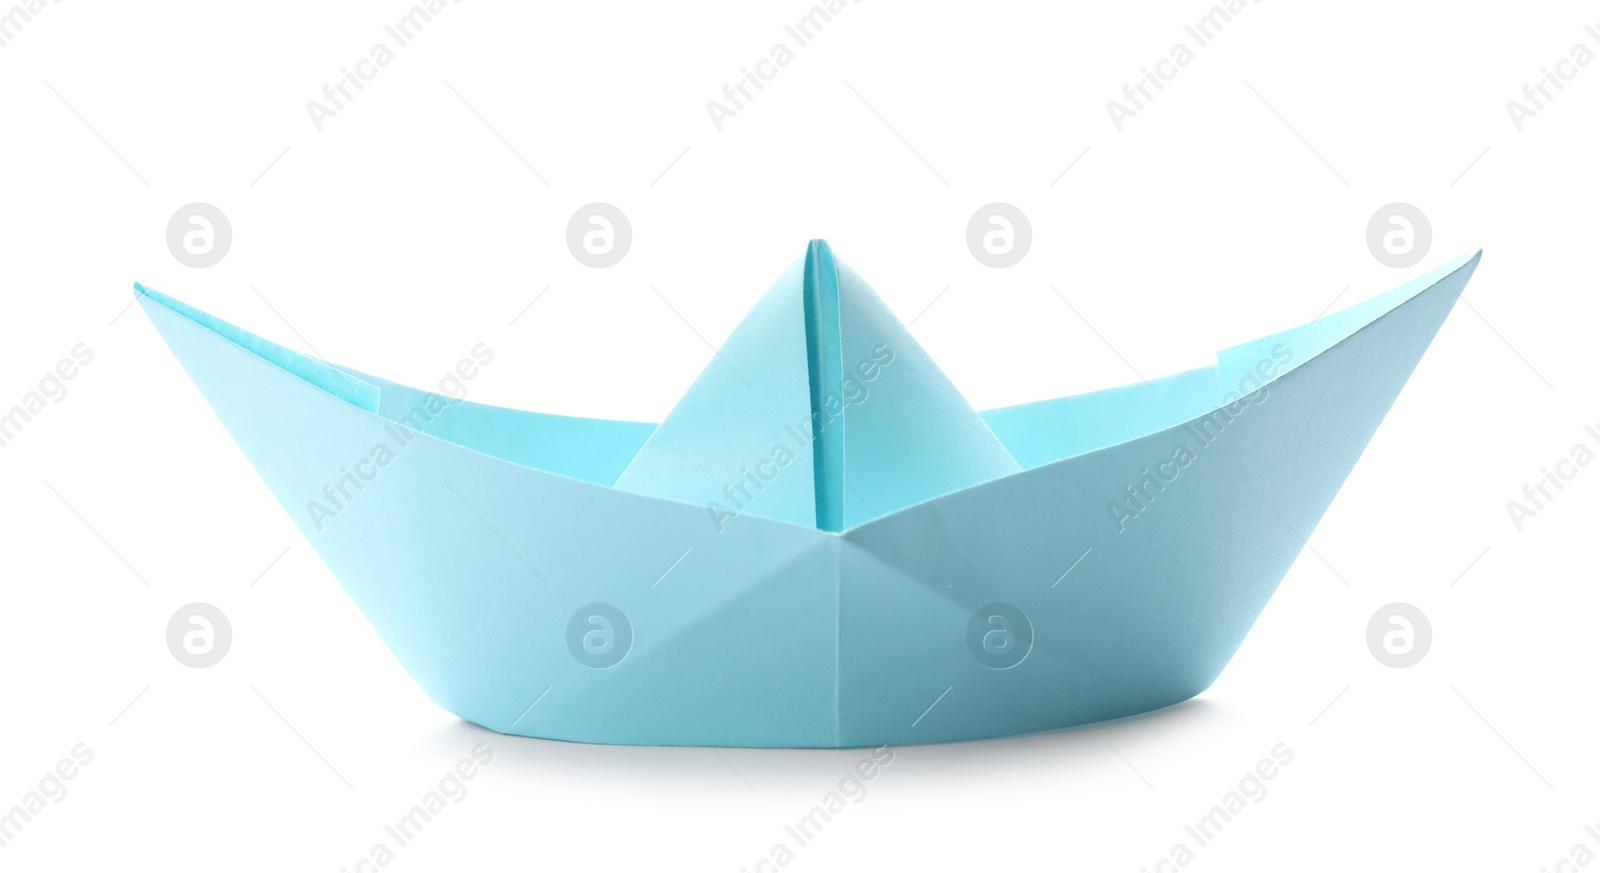 Photo of Handmade light blue paper boat isolated on white. Origami art